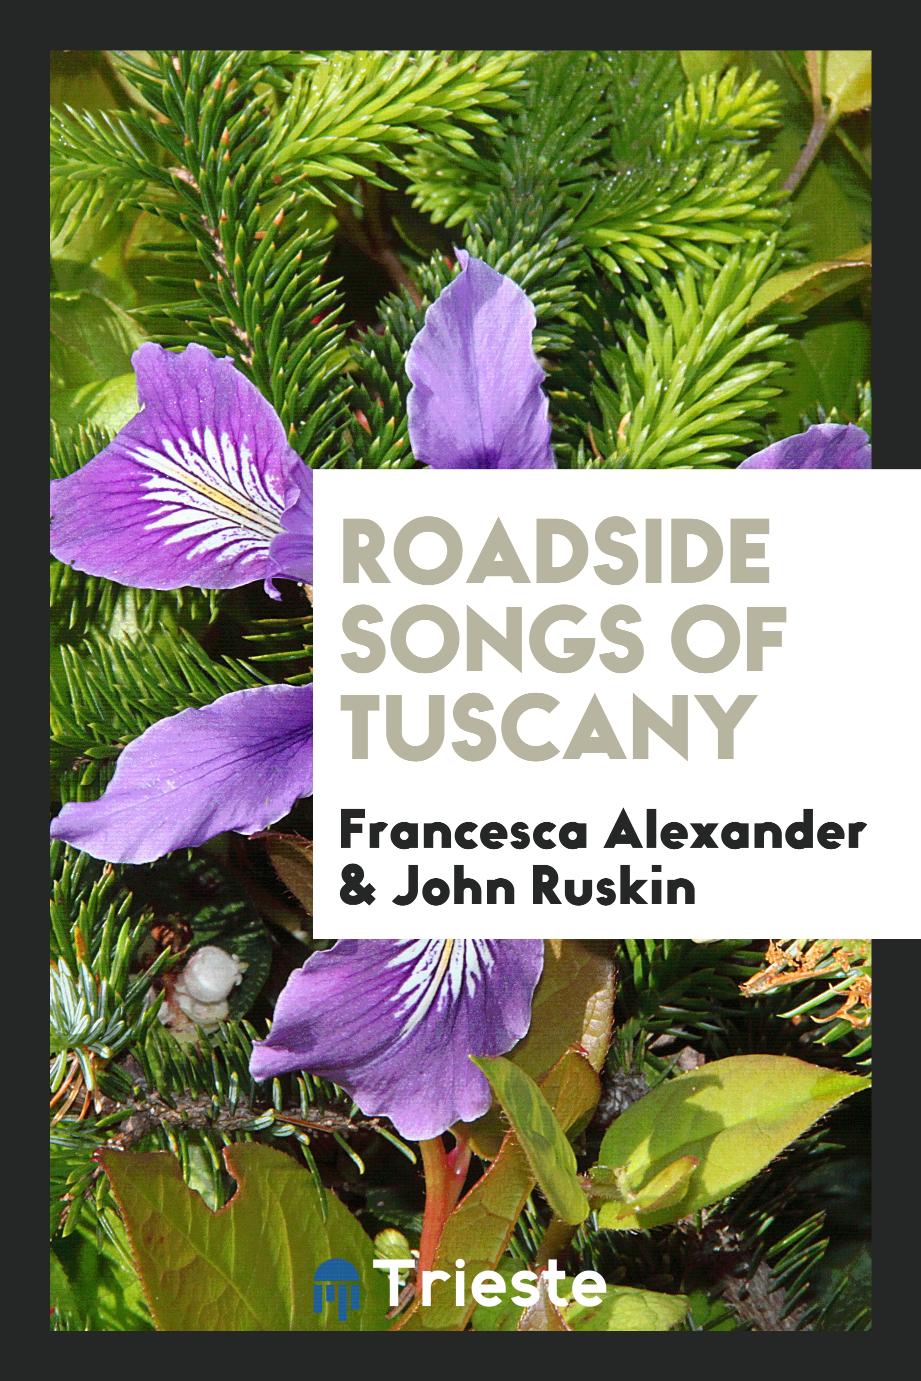 Roadside songs of Tuscany